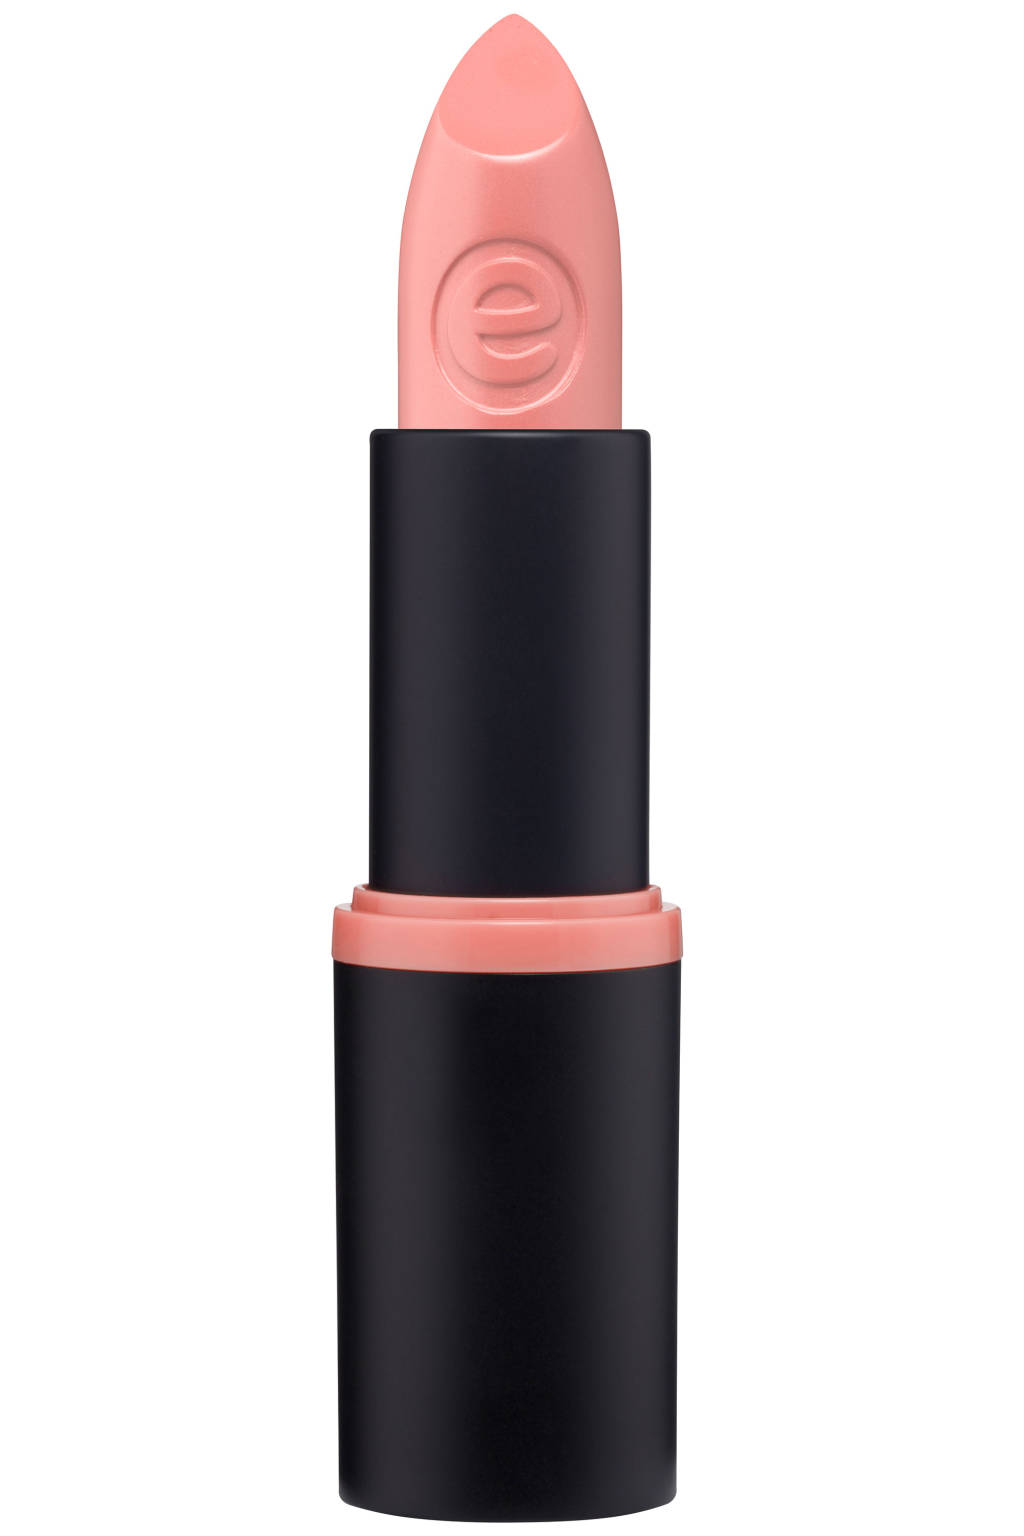 hbz-fall-lipstick-preview-nudes-ess-lg.jpg